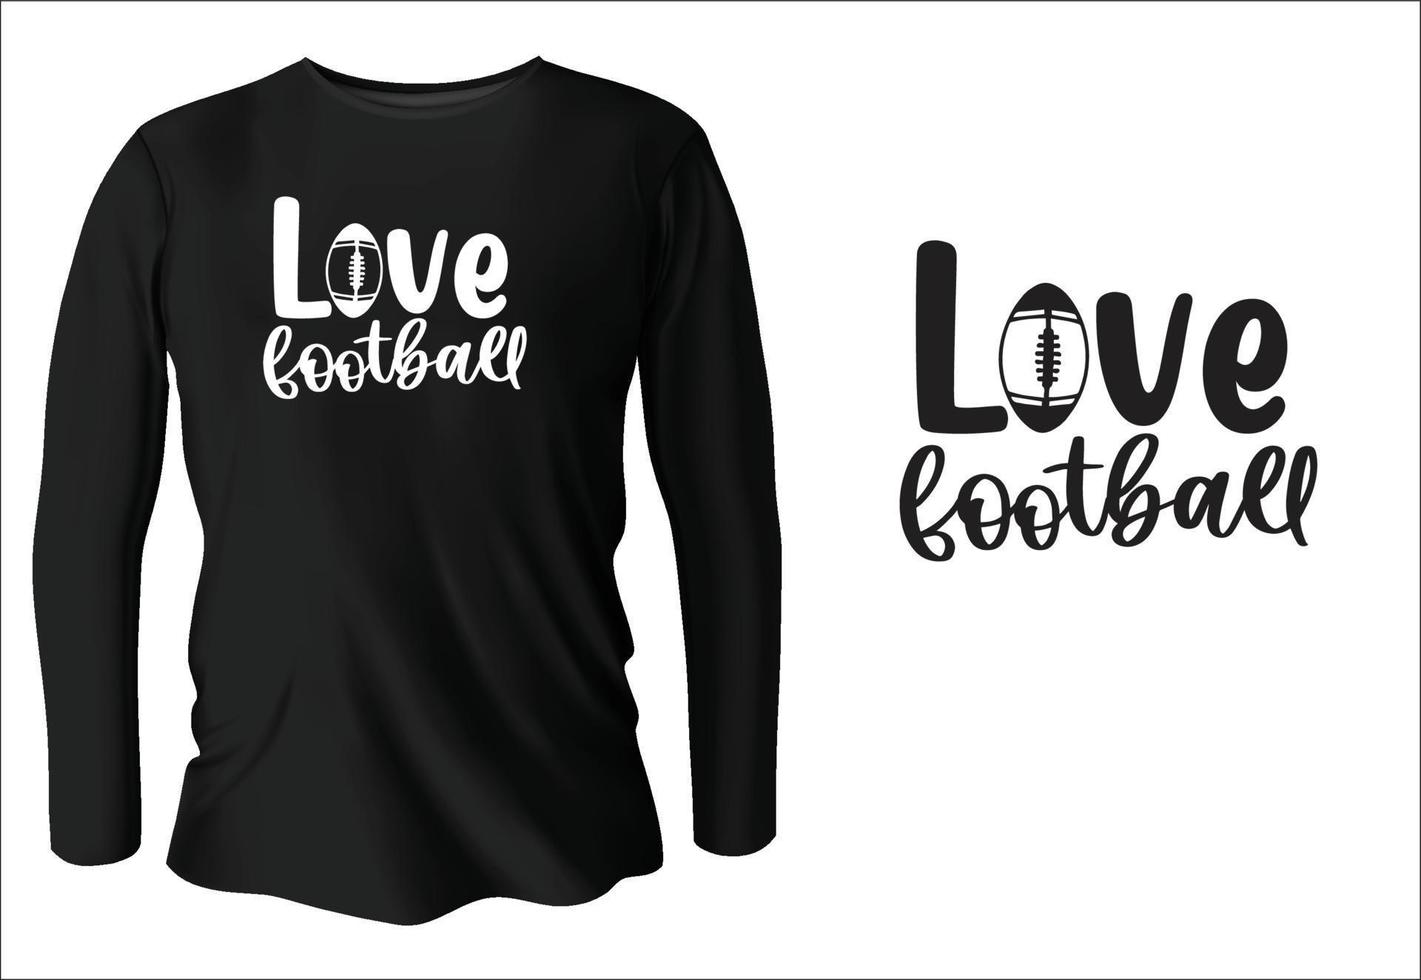 liefde Amerikaans voetbal t-shirt ontwerp met vector